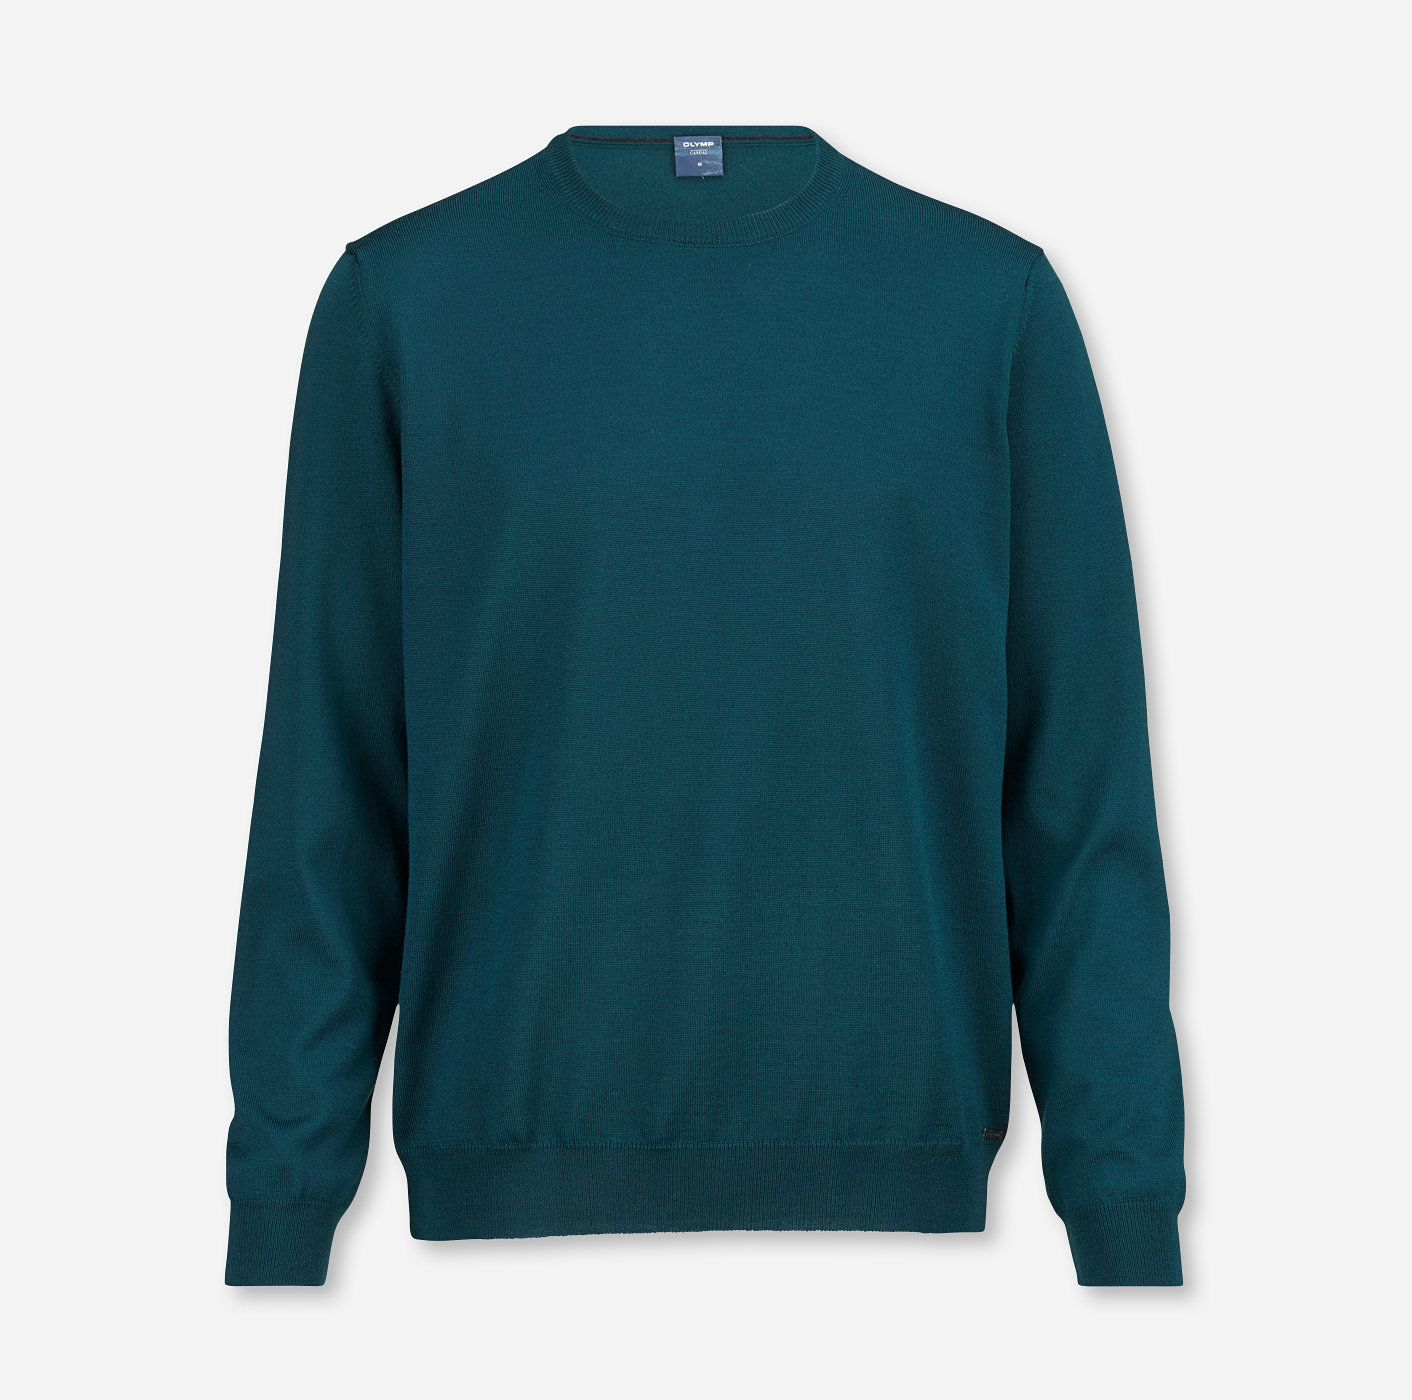 OLYMP Knitwear, modern fit, Pullover crew neck | Emerald